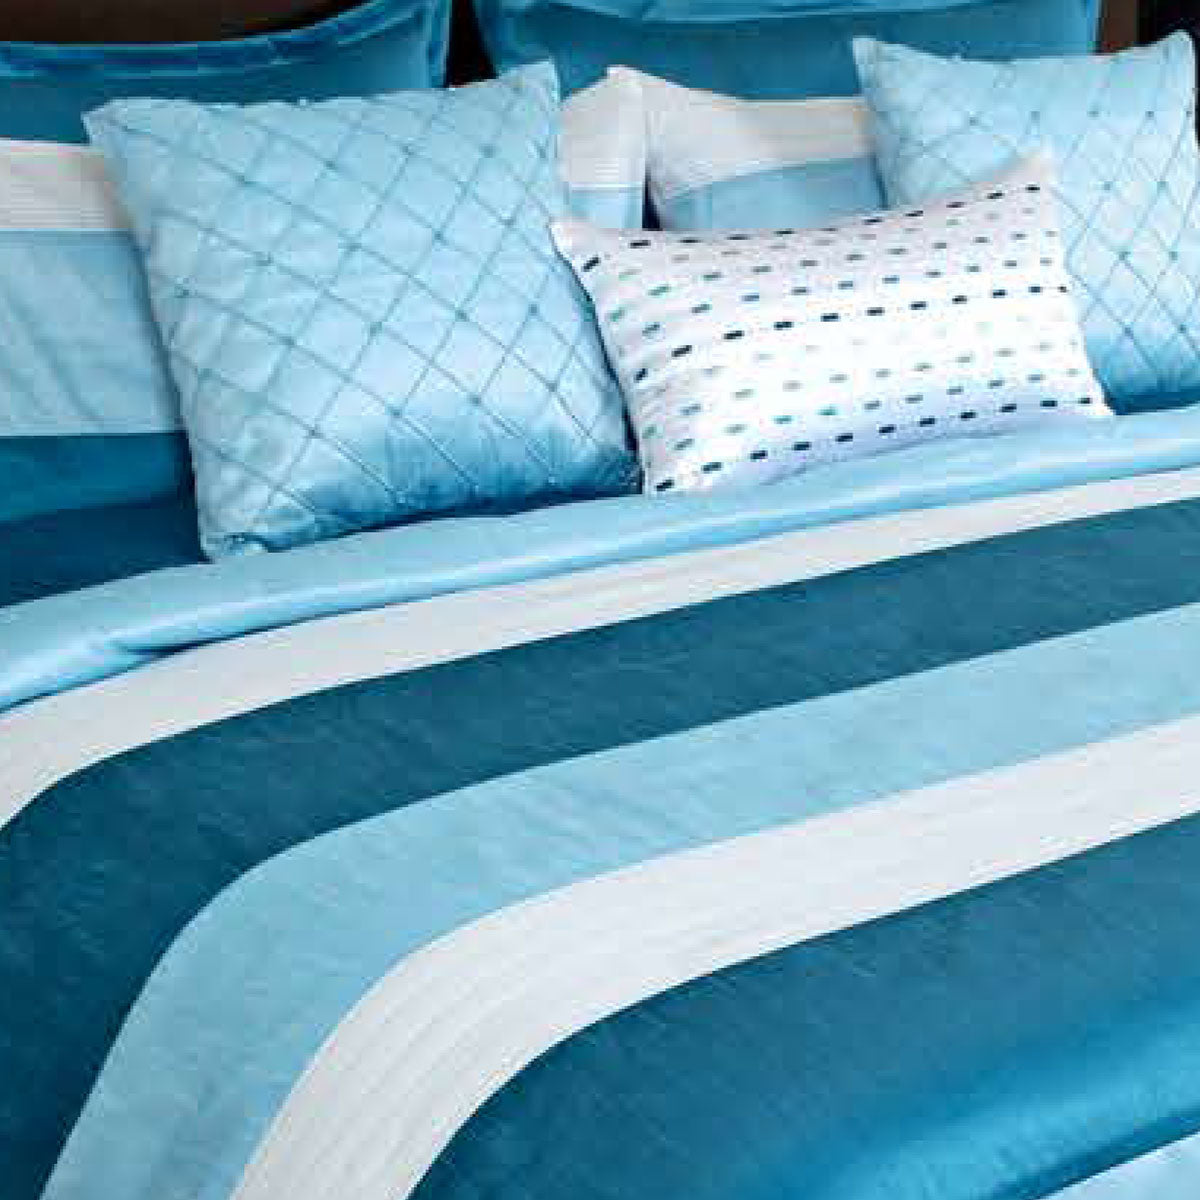 Mark Home Cotton Bluebells Bedding Set 9 pcs